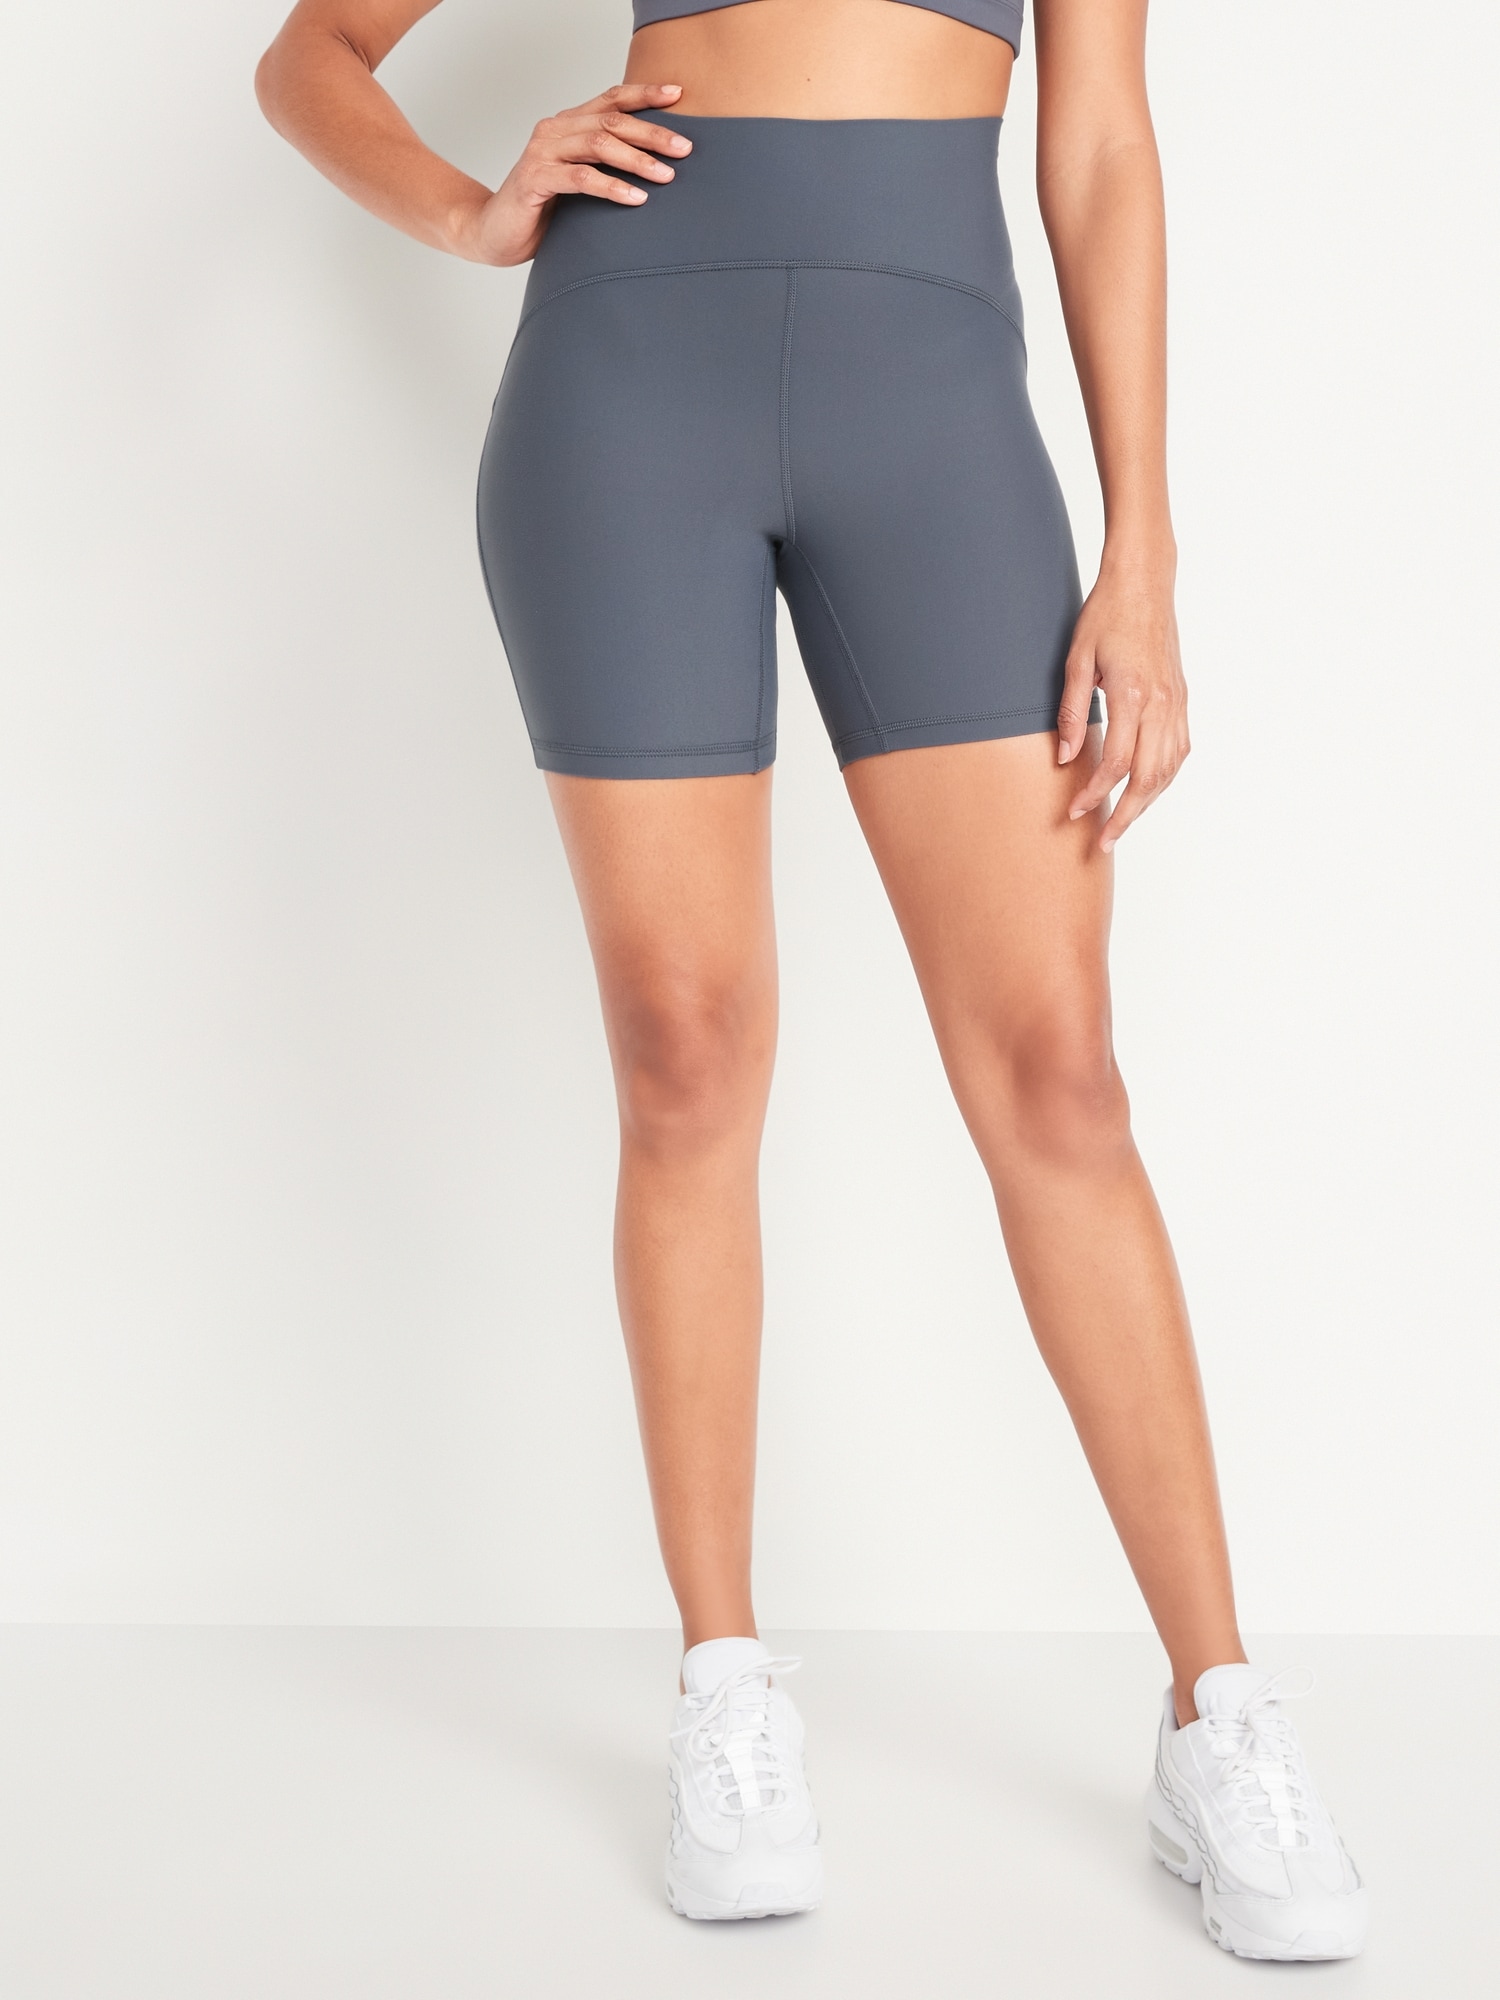 Old Navy Extra High-Waisted PowerLite Lycra ADAPTIV Biker Shorts for Women  - 6-inch inseam